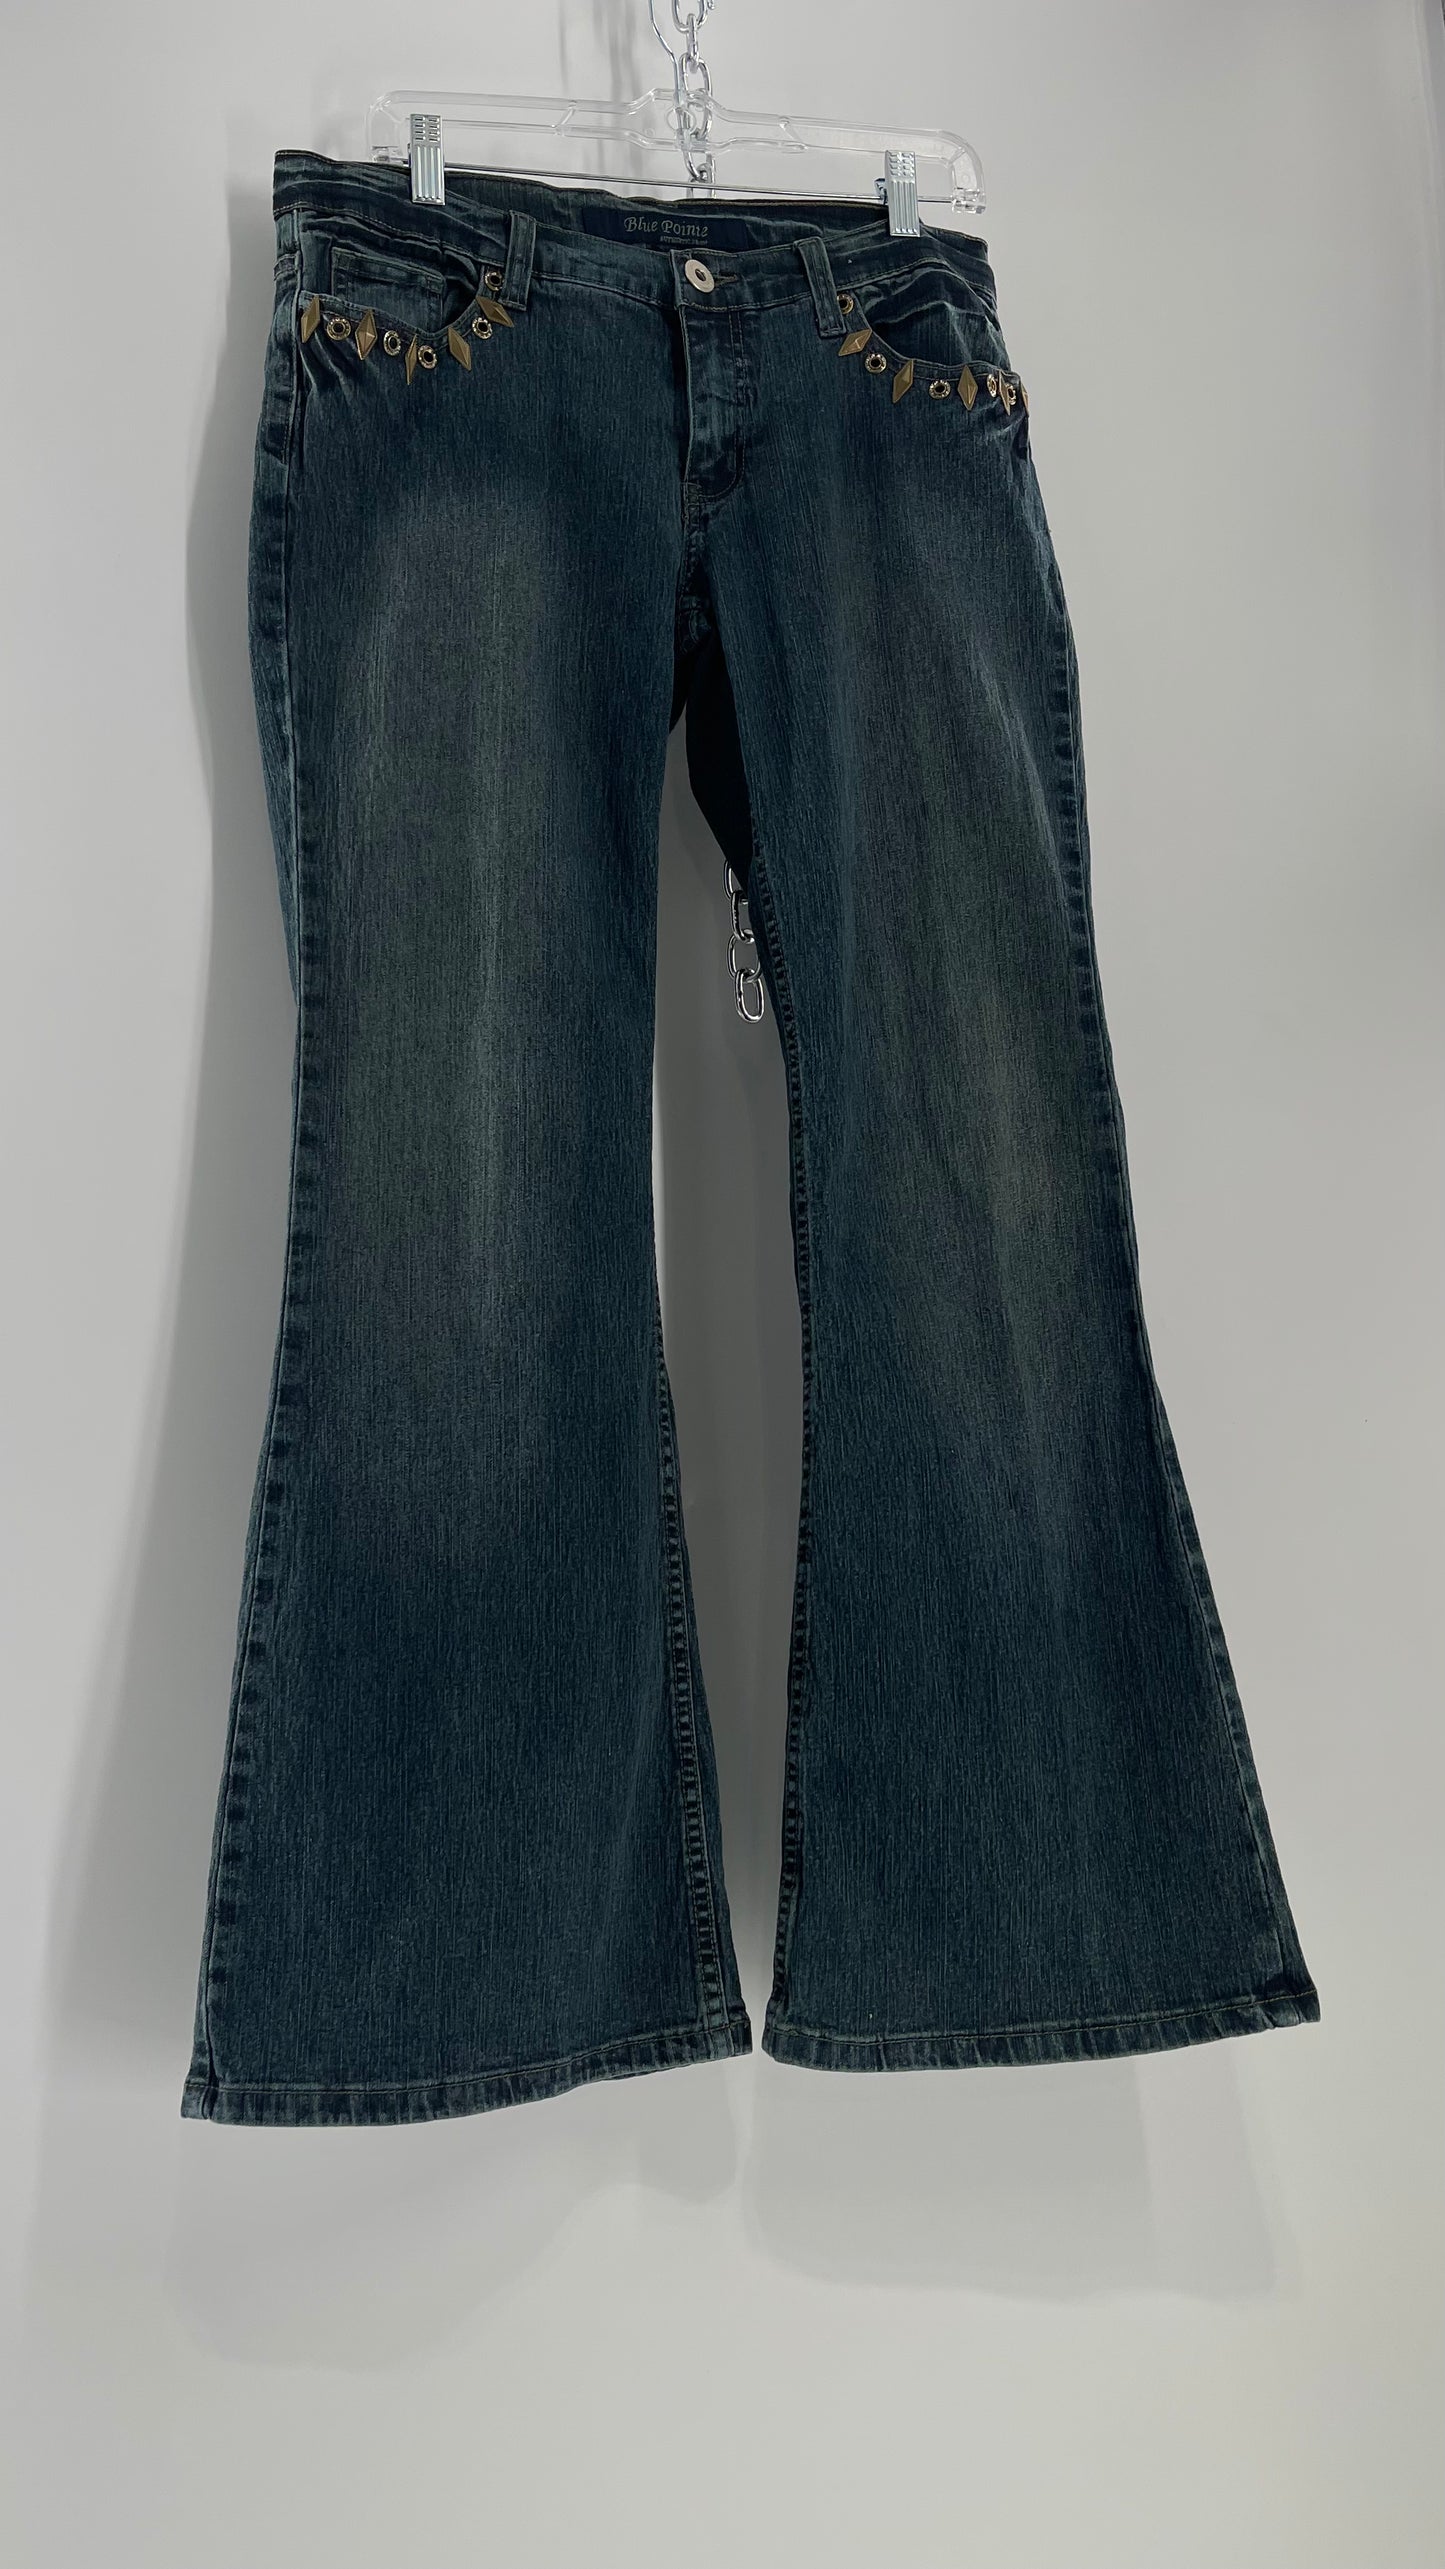 Vintage Blue Pointe Kickflare Medium Wash Jeans with Gold Rhinestone Metal Jewels (13)